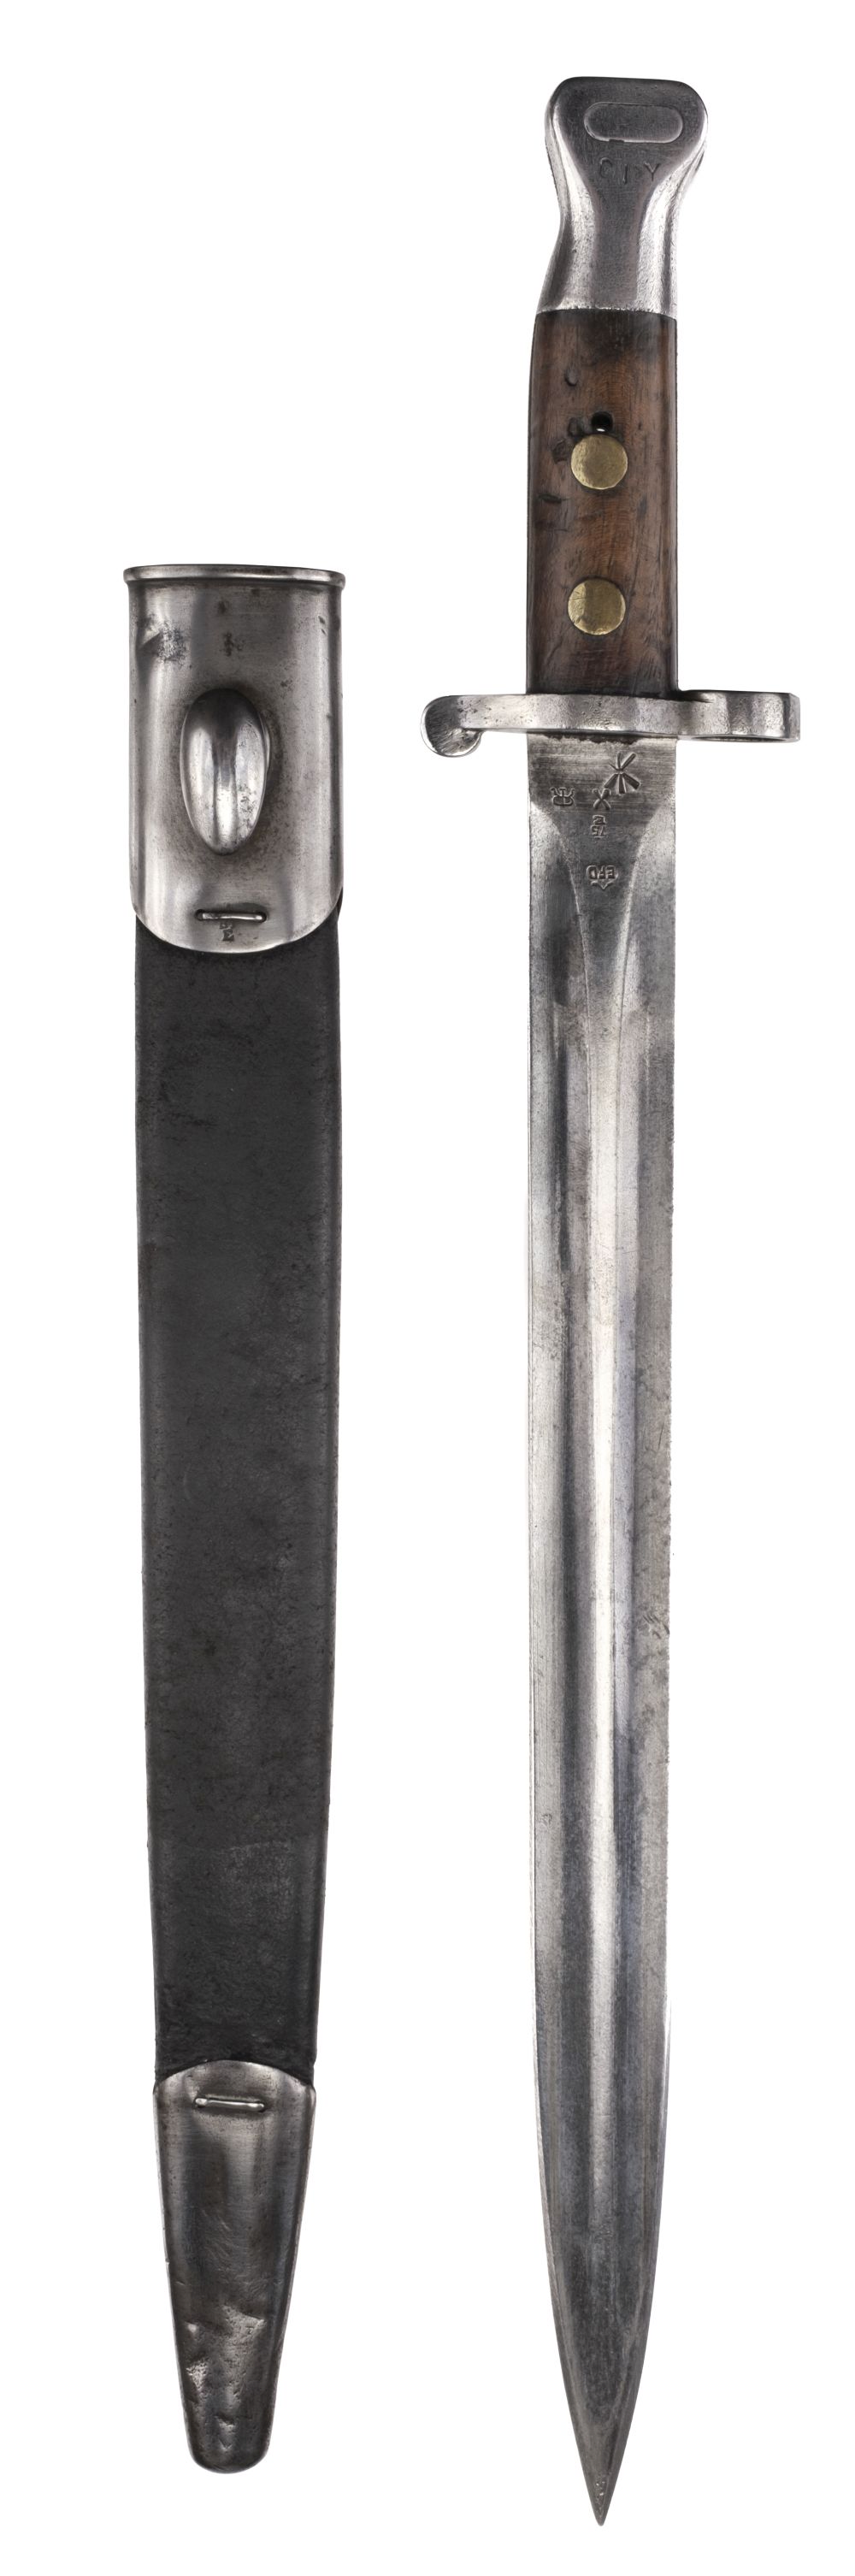 Bayonet. British 1888 pattern Mk II Lee Metford rifle bayonet